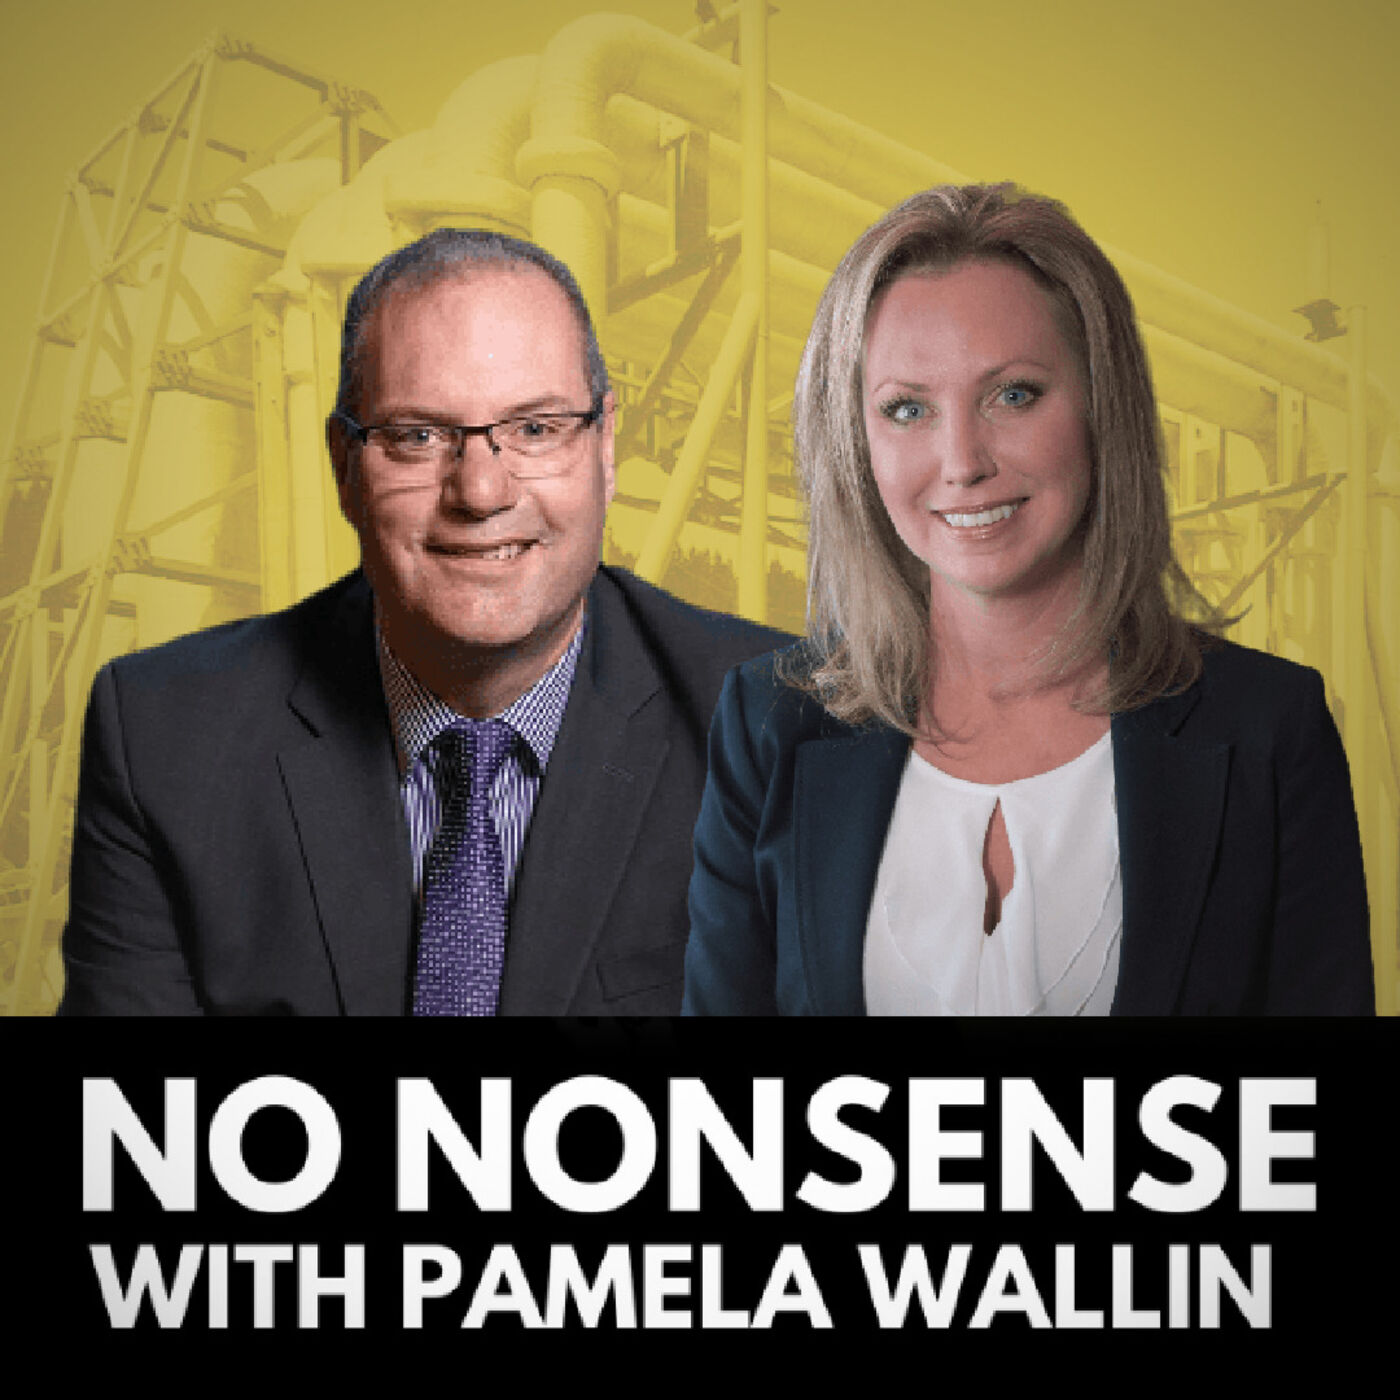 No Nonsense with Pamela Wallin Archives - Pamela Wallin